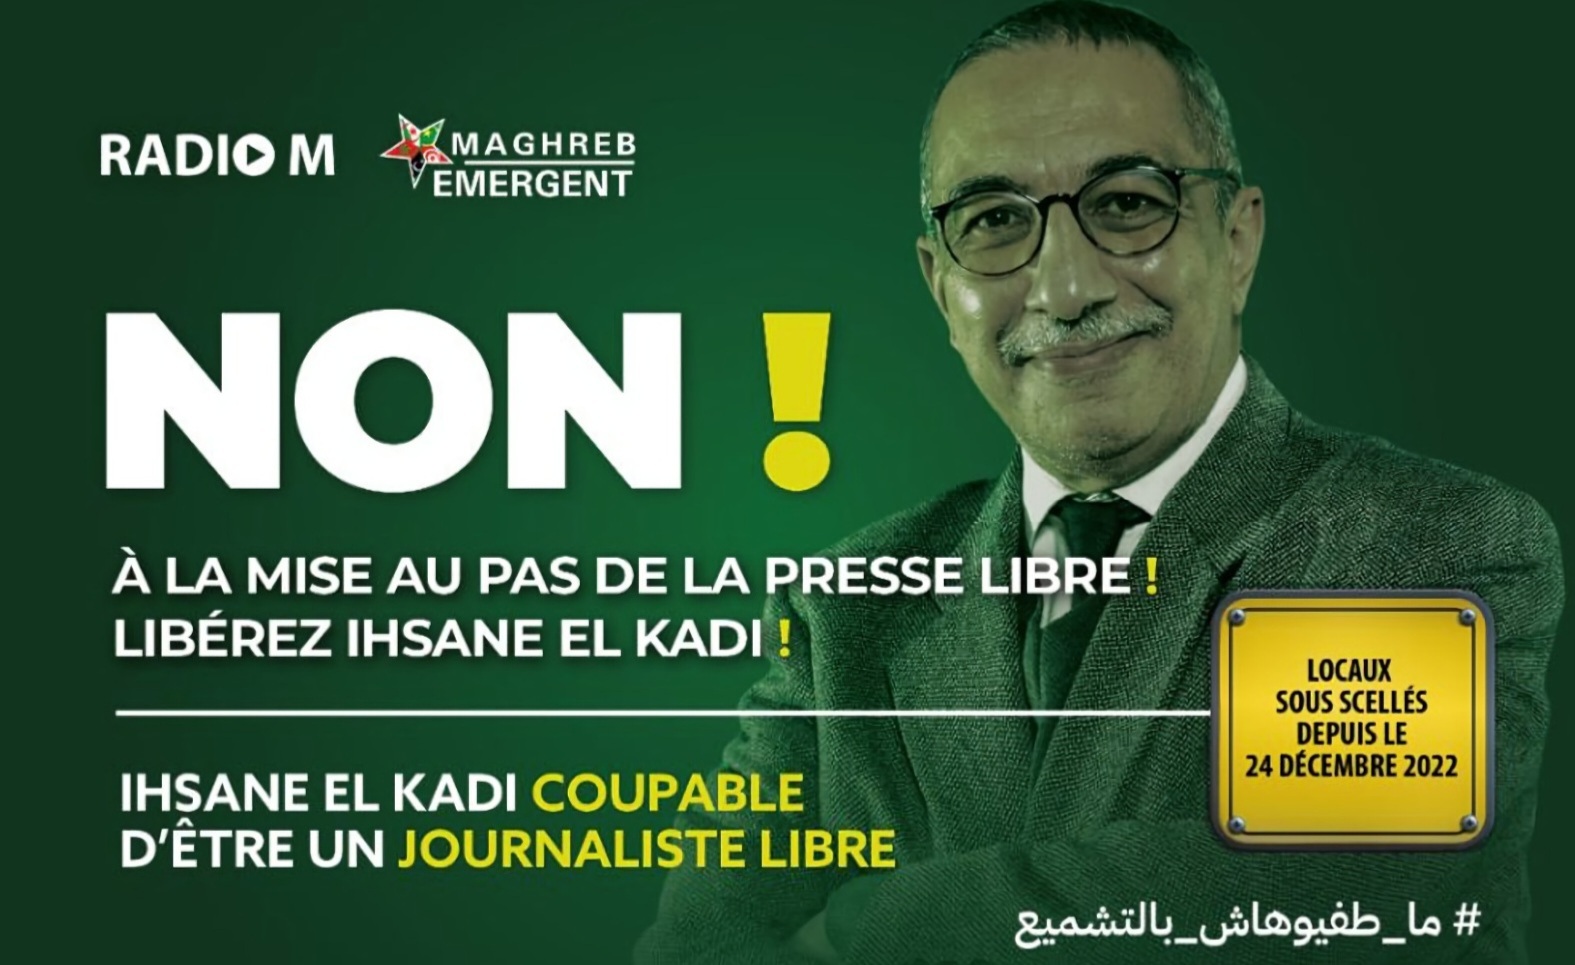 Affaire Ihsane El Kadi et Radio M et Maghreb Émergent: Veille presse